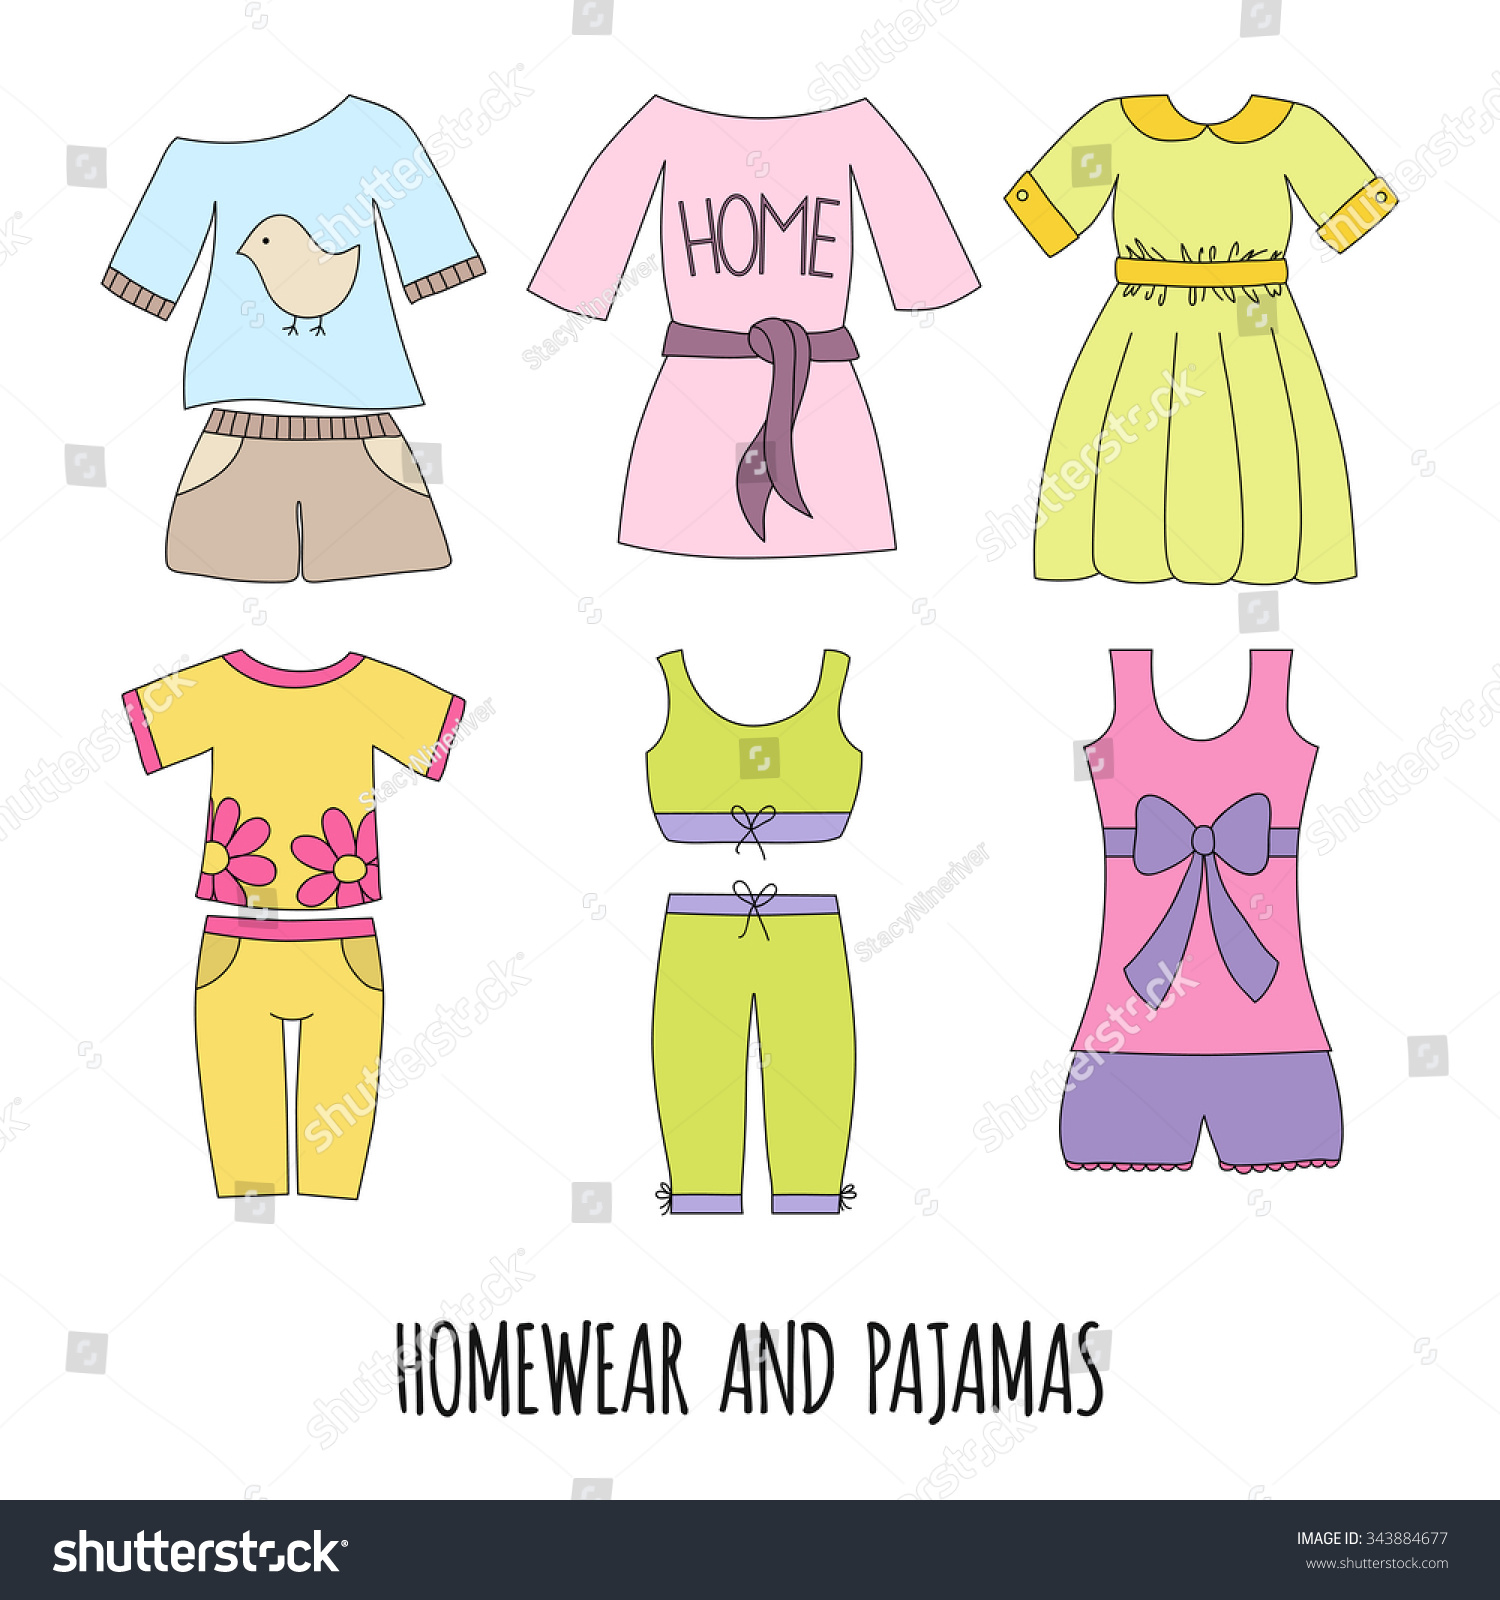 Cute Homewear Pajamas Set Hand Draw Stock Vector 343884677 - Shutterstock